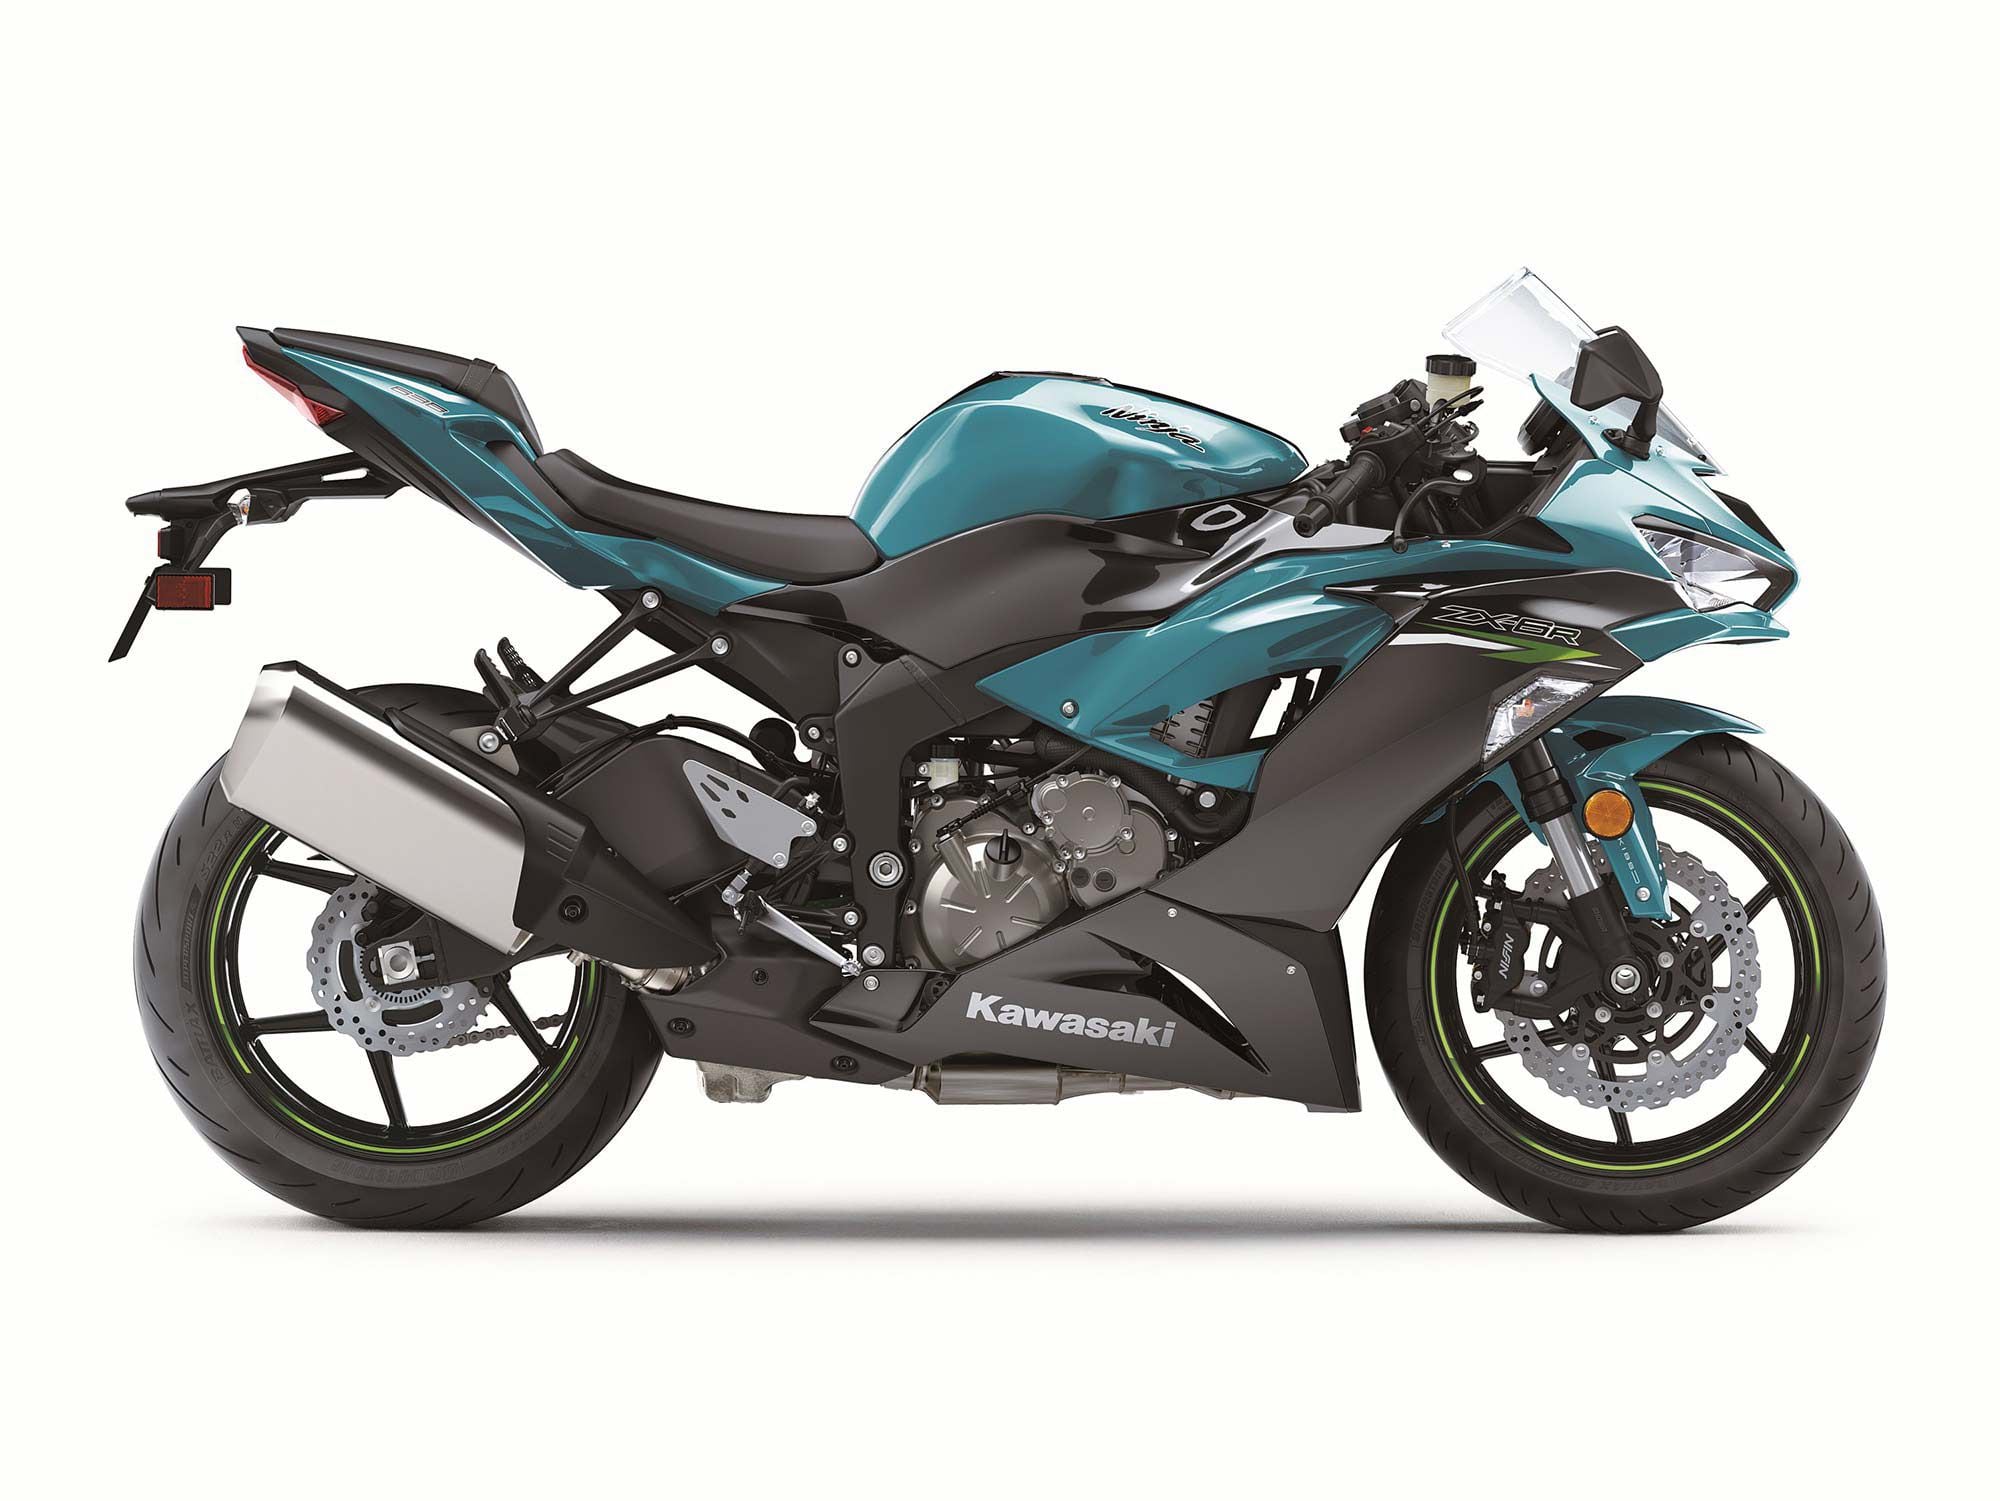 2021 Kawasaki Ninja Buyer's Guide: Specs, Photos, Price | Cycle World